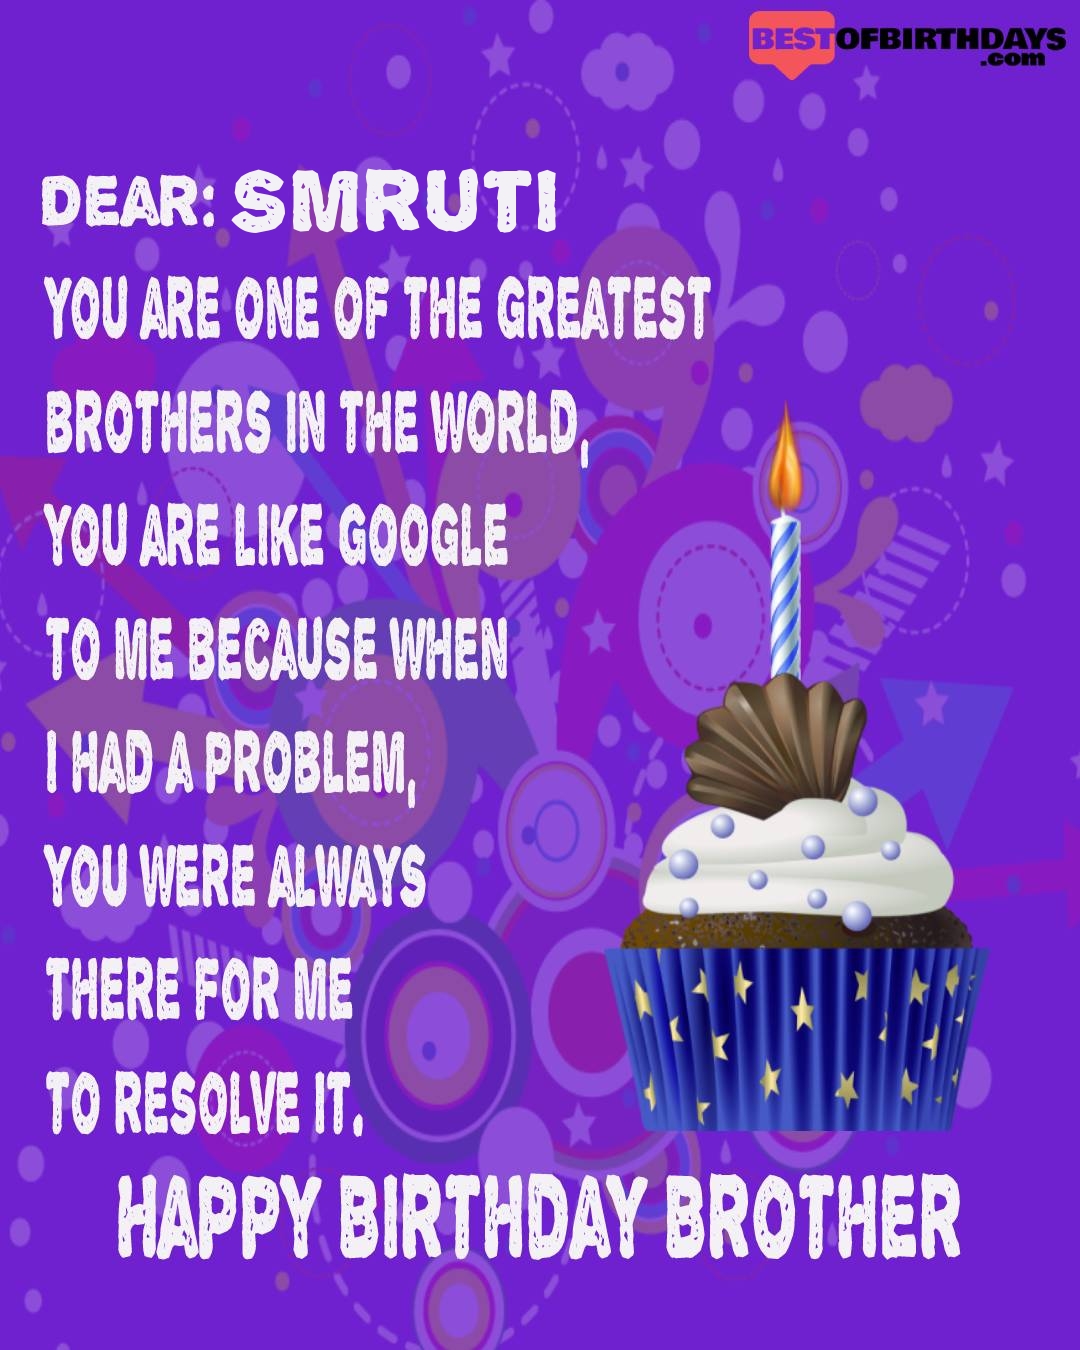 Happy birthday smruti bhai brother bro